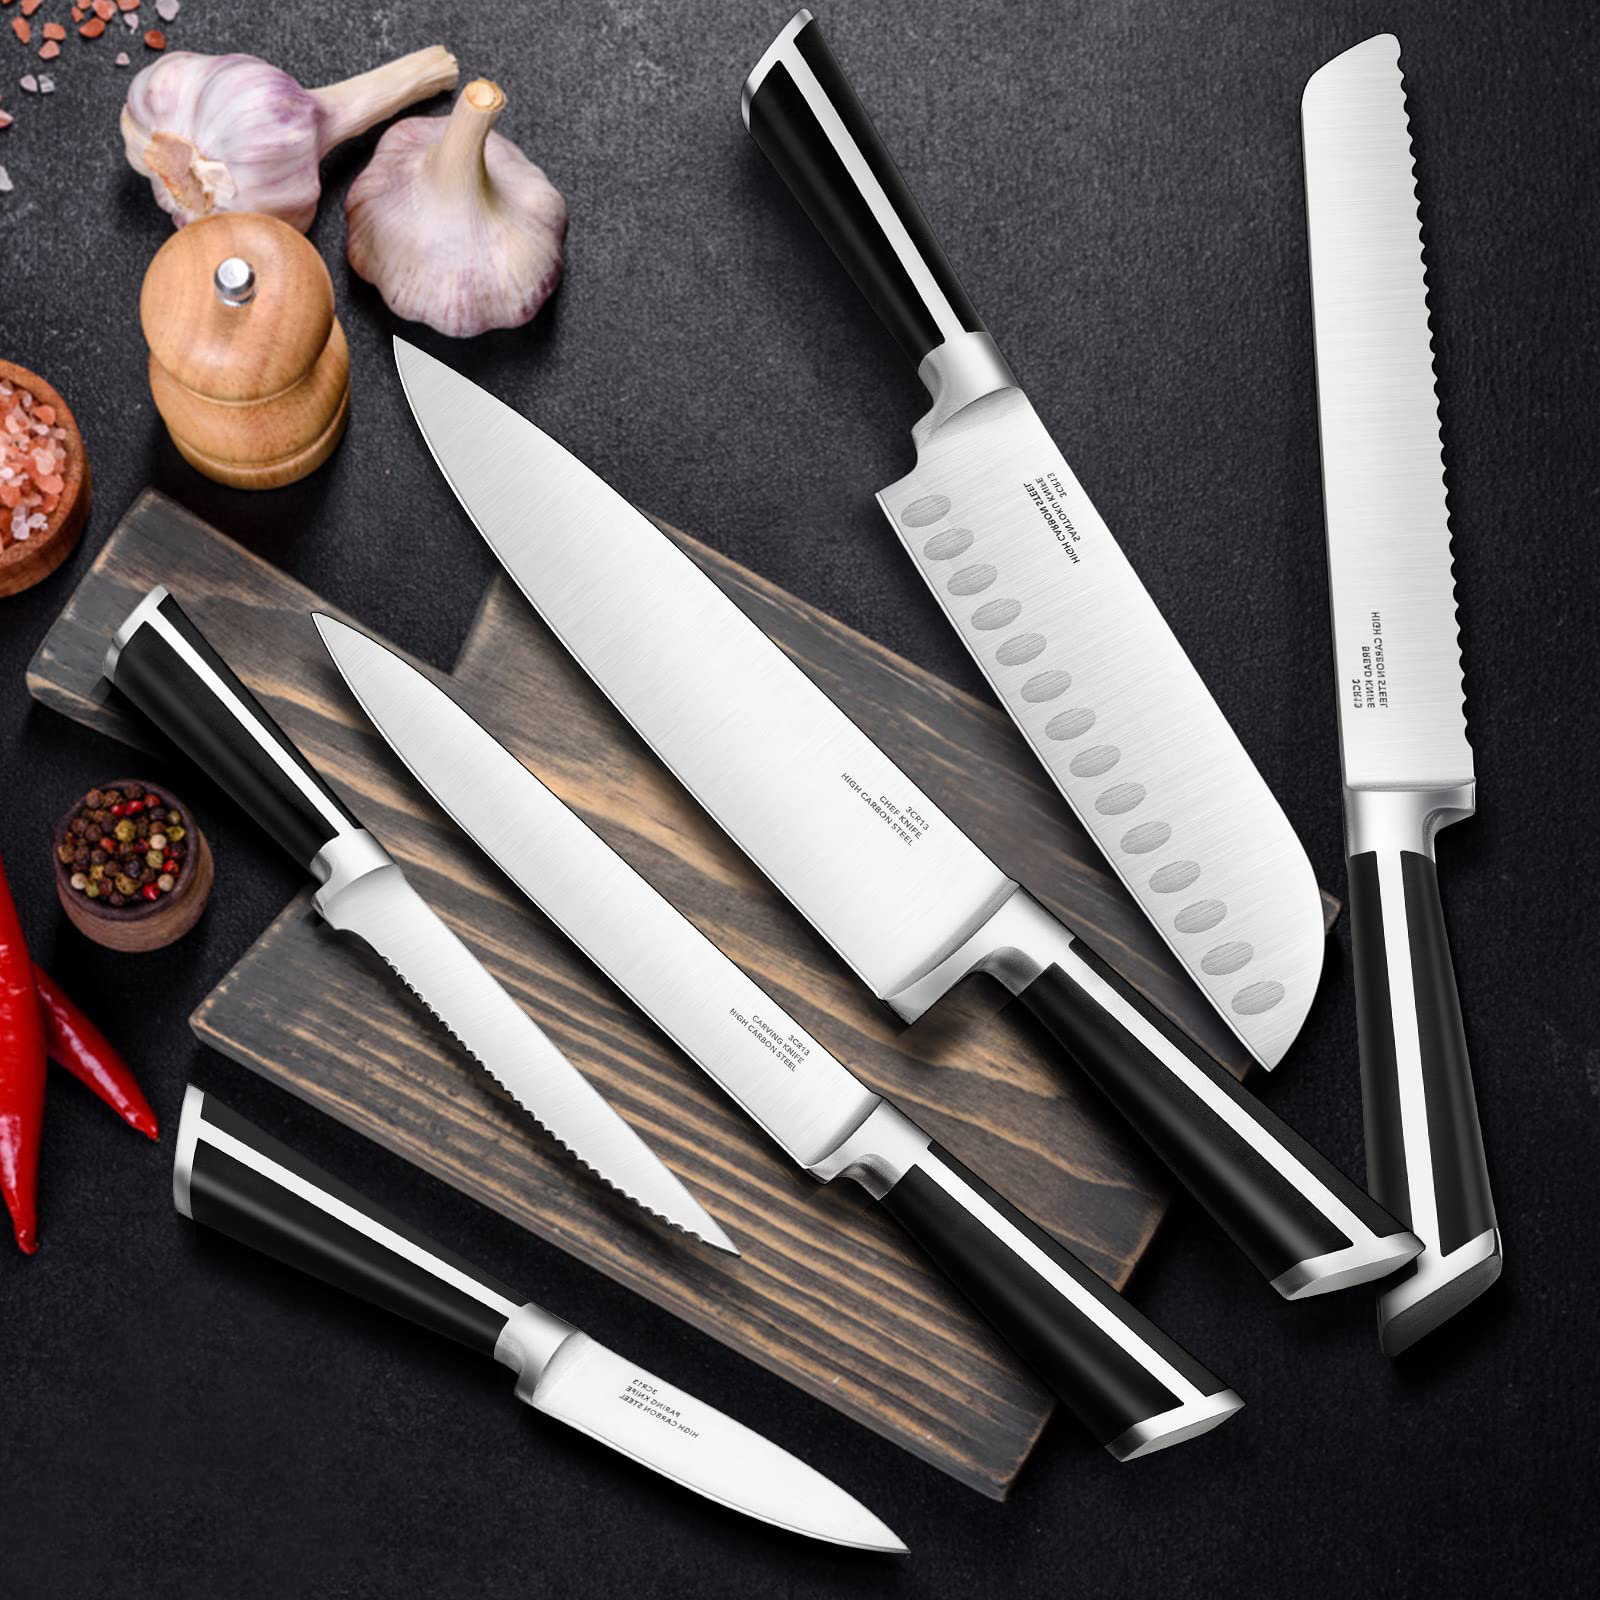 Knife Set, Astercook 21 Pieces Knife Sets for Kitchen with Block,  Dishwasher Safe Kitchen Knife Set with Built-in Sharpener, German Stainless  Steel